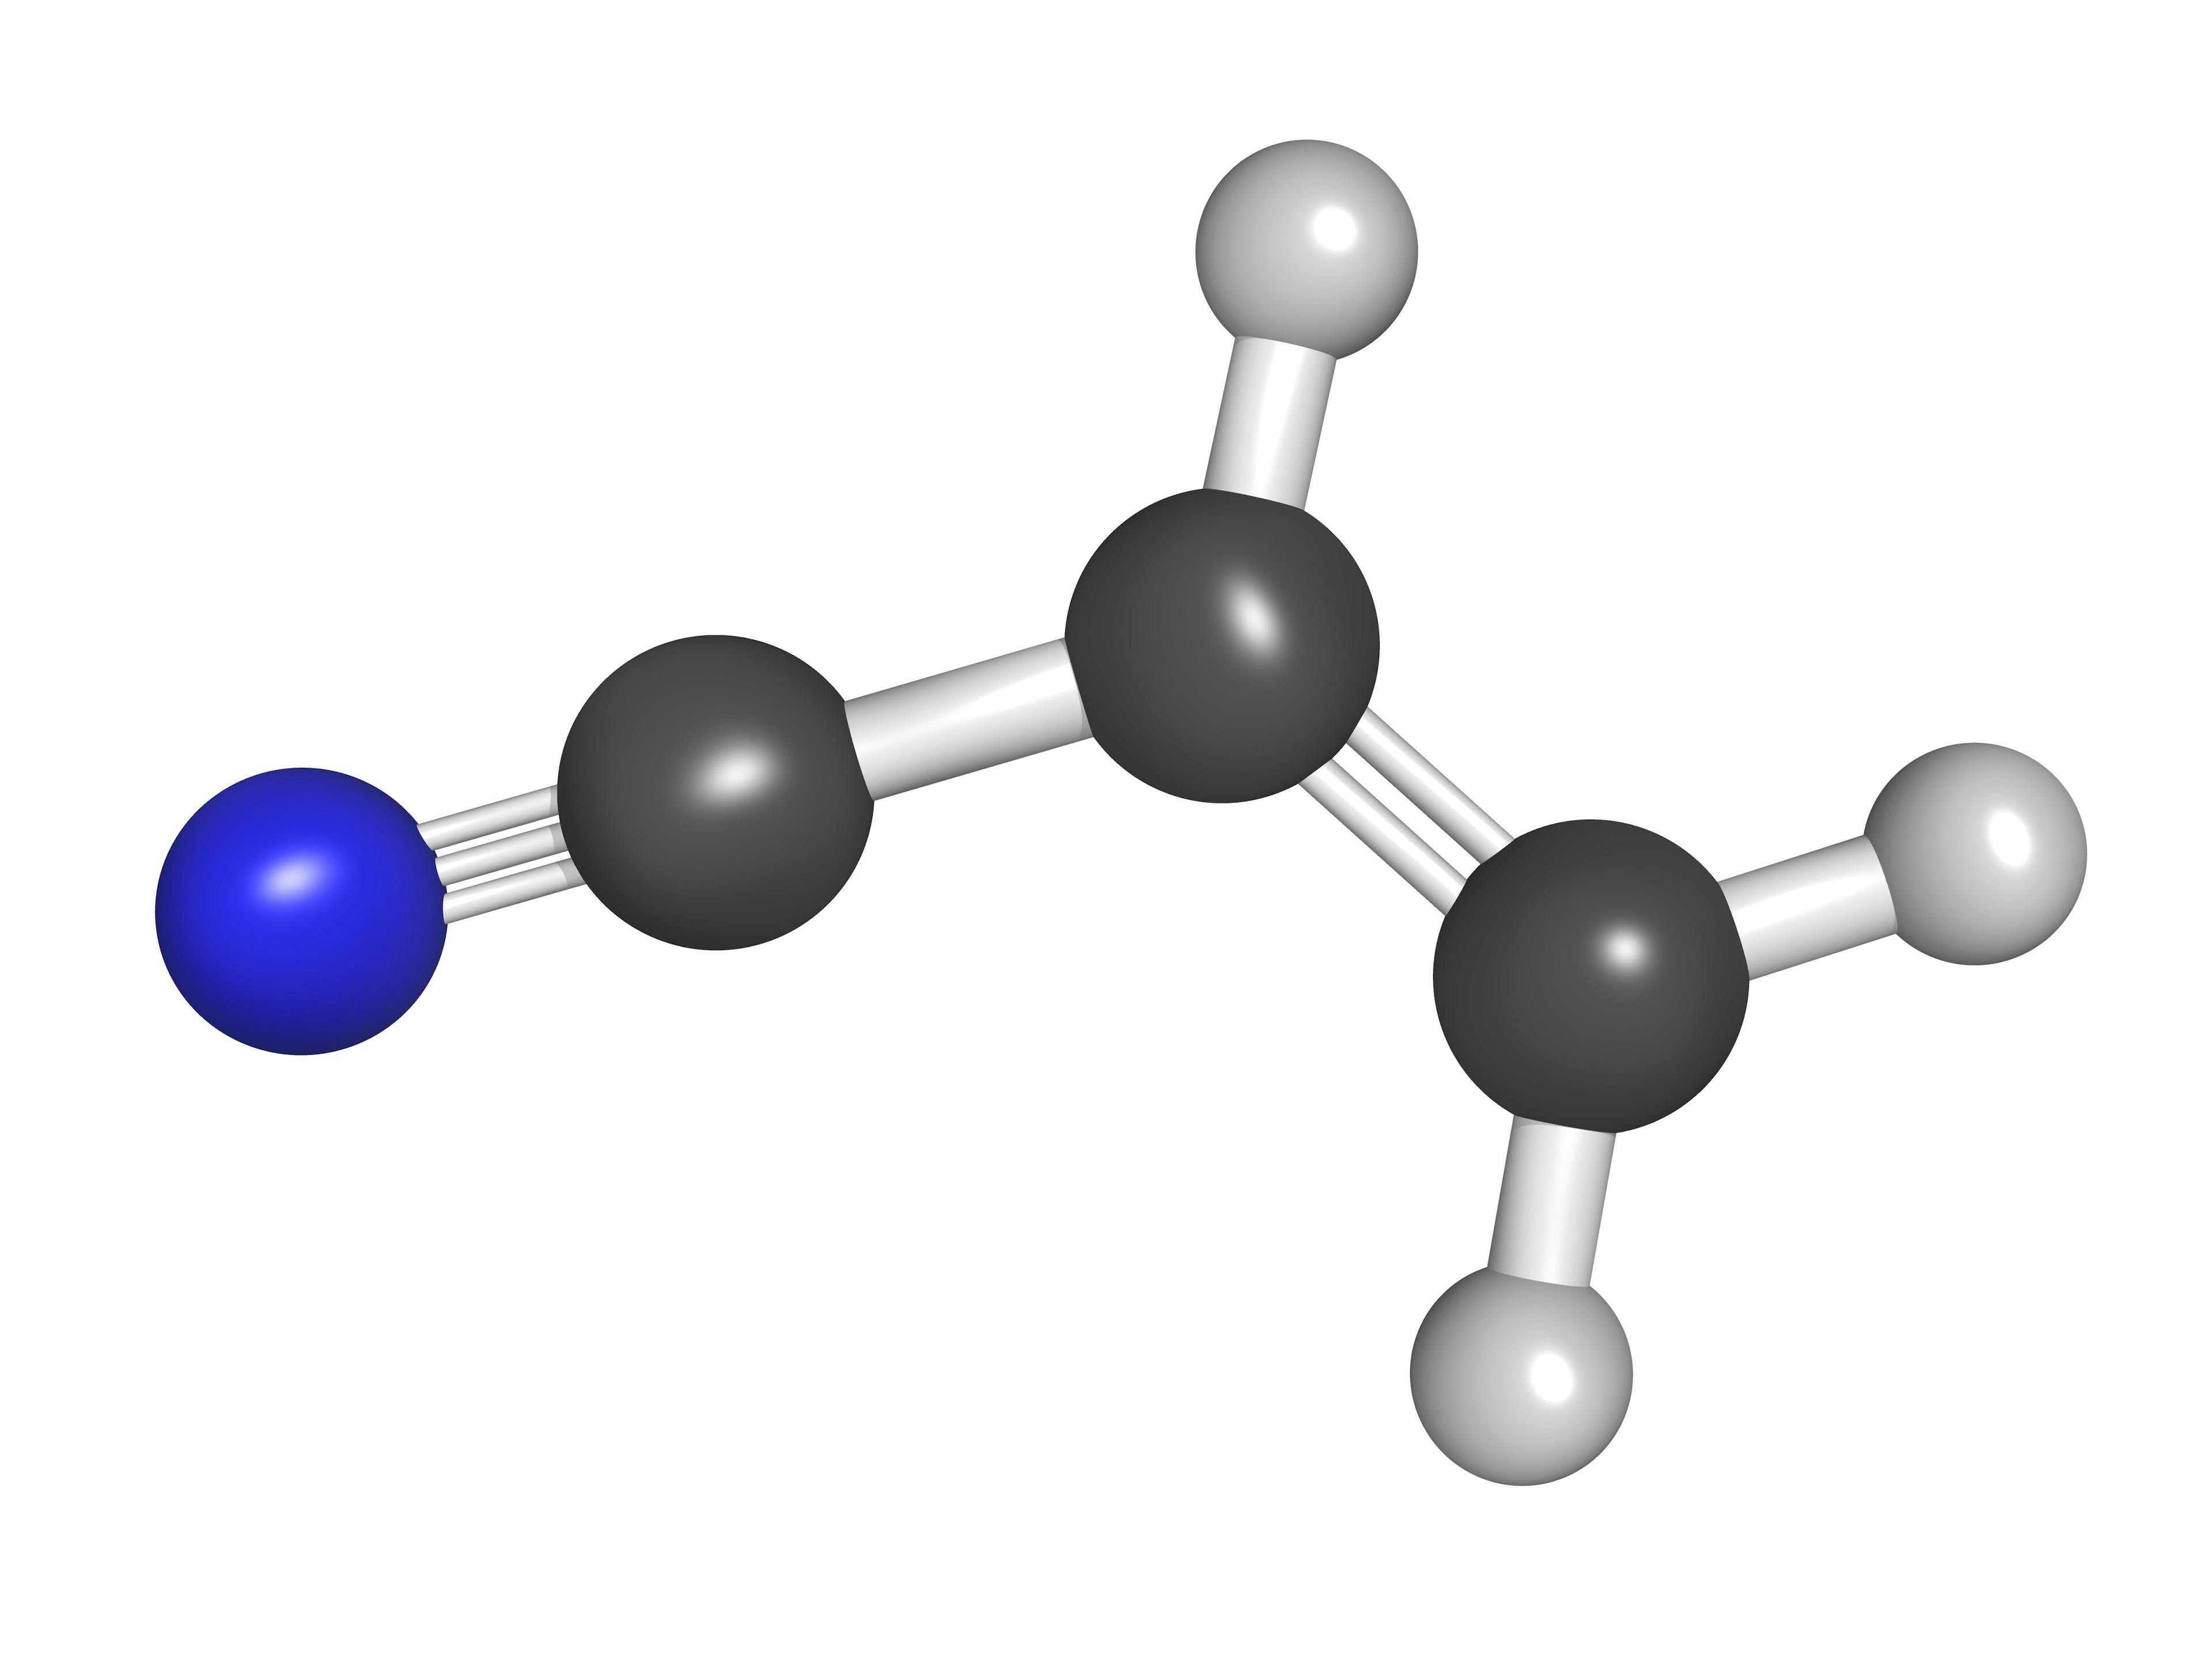 Acrylonitrile molecule ball and stick model | Image Credit: © ibreakstock - stock.adobe.com.